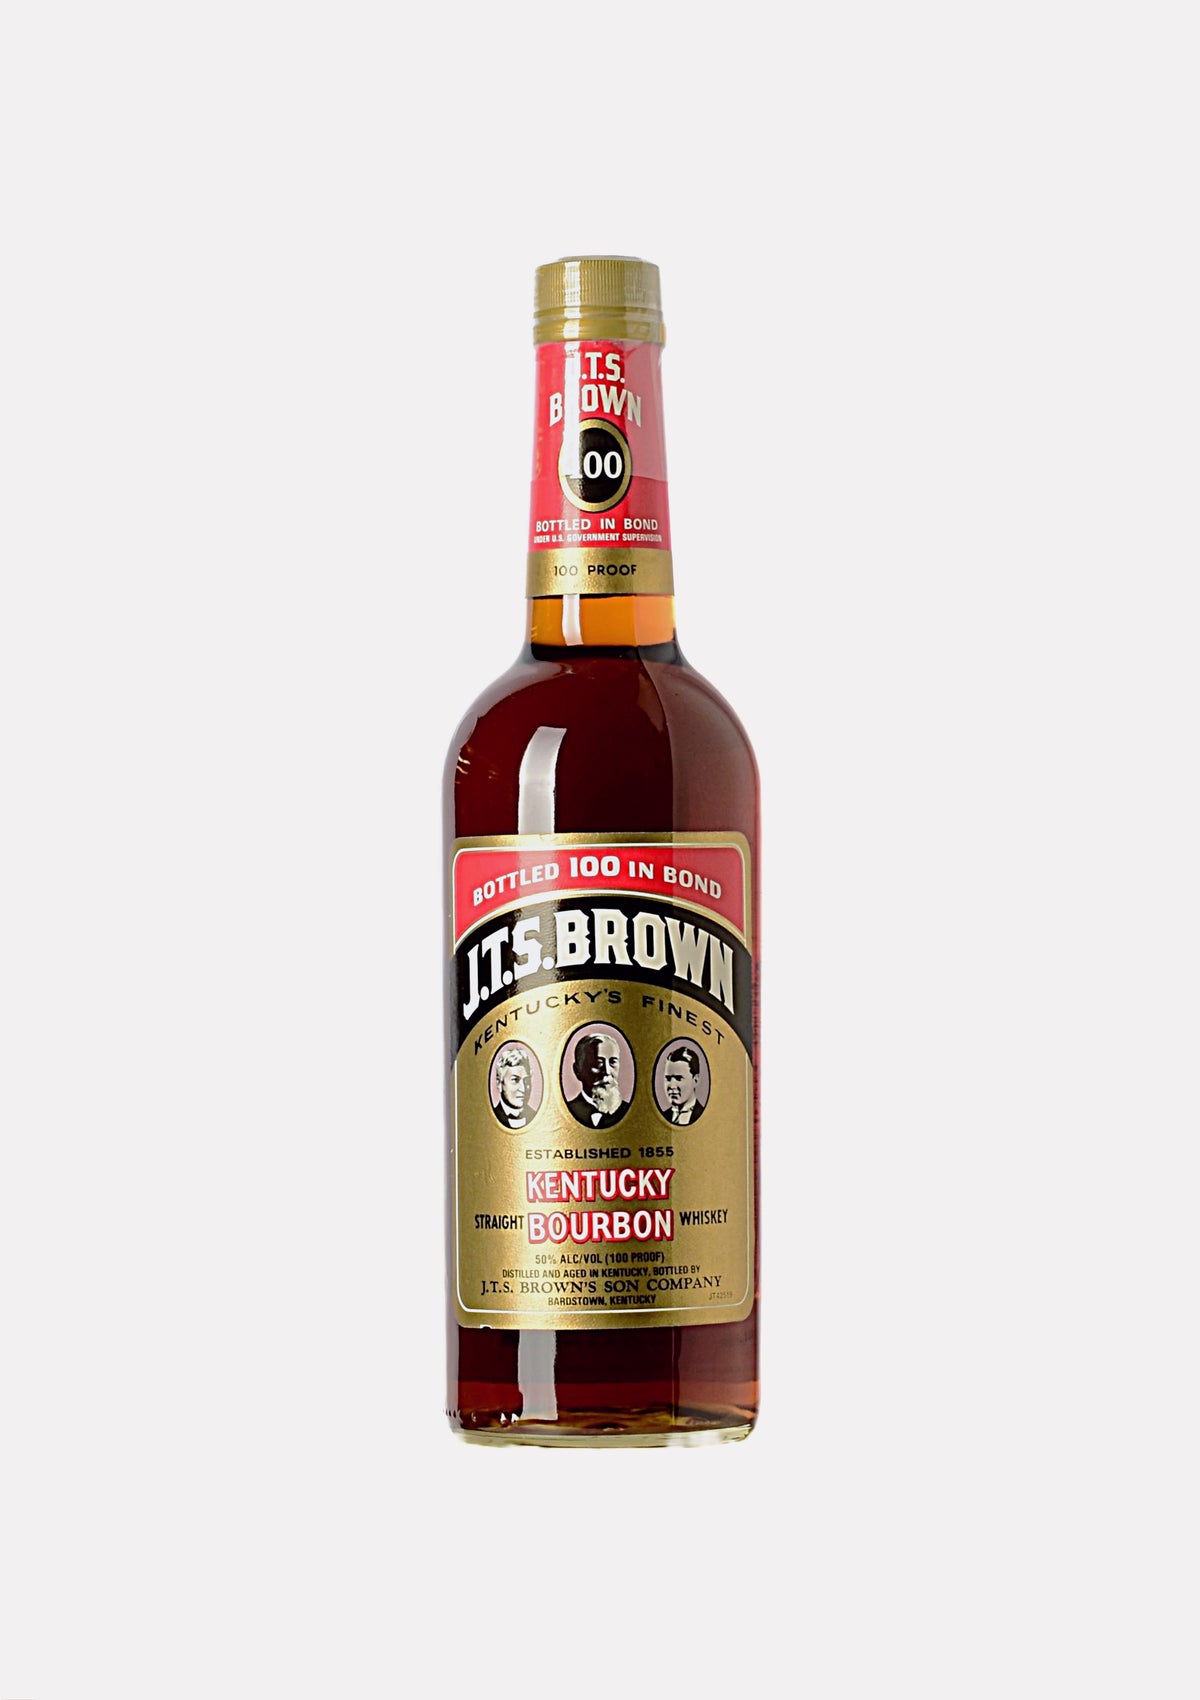 J.T.S. Brown Kentucky Straight Bourbon Whiskey 100 Proof